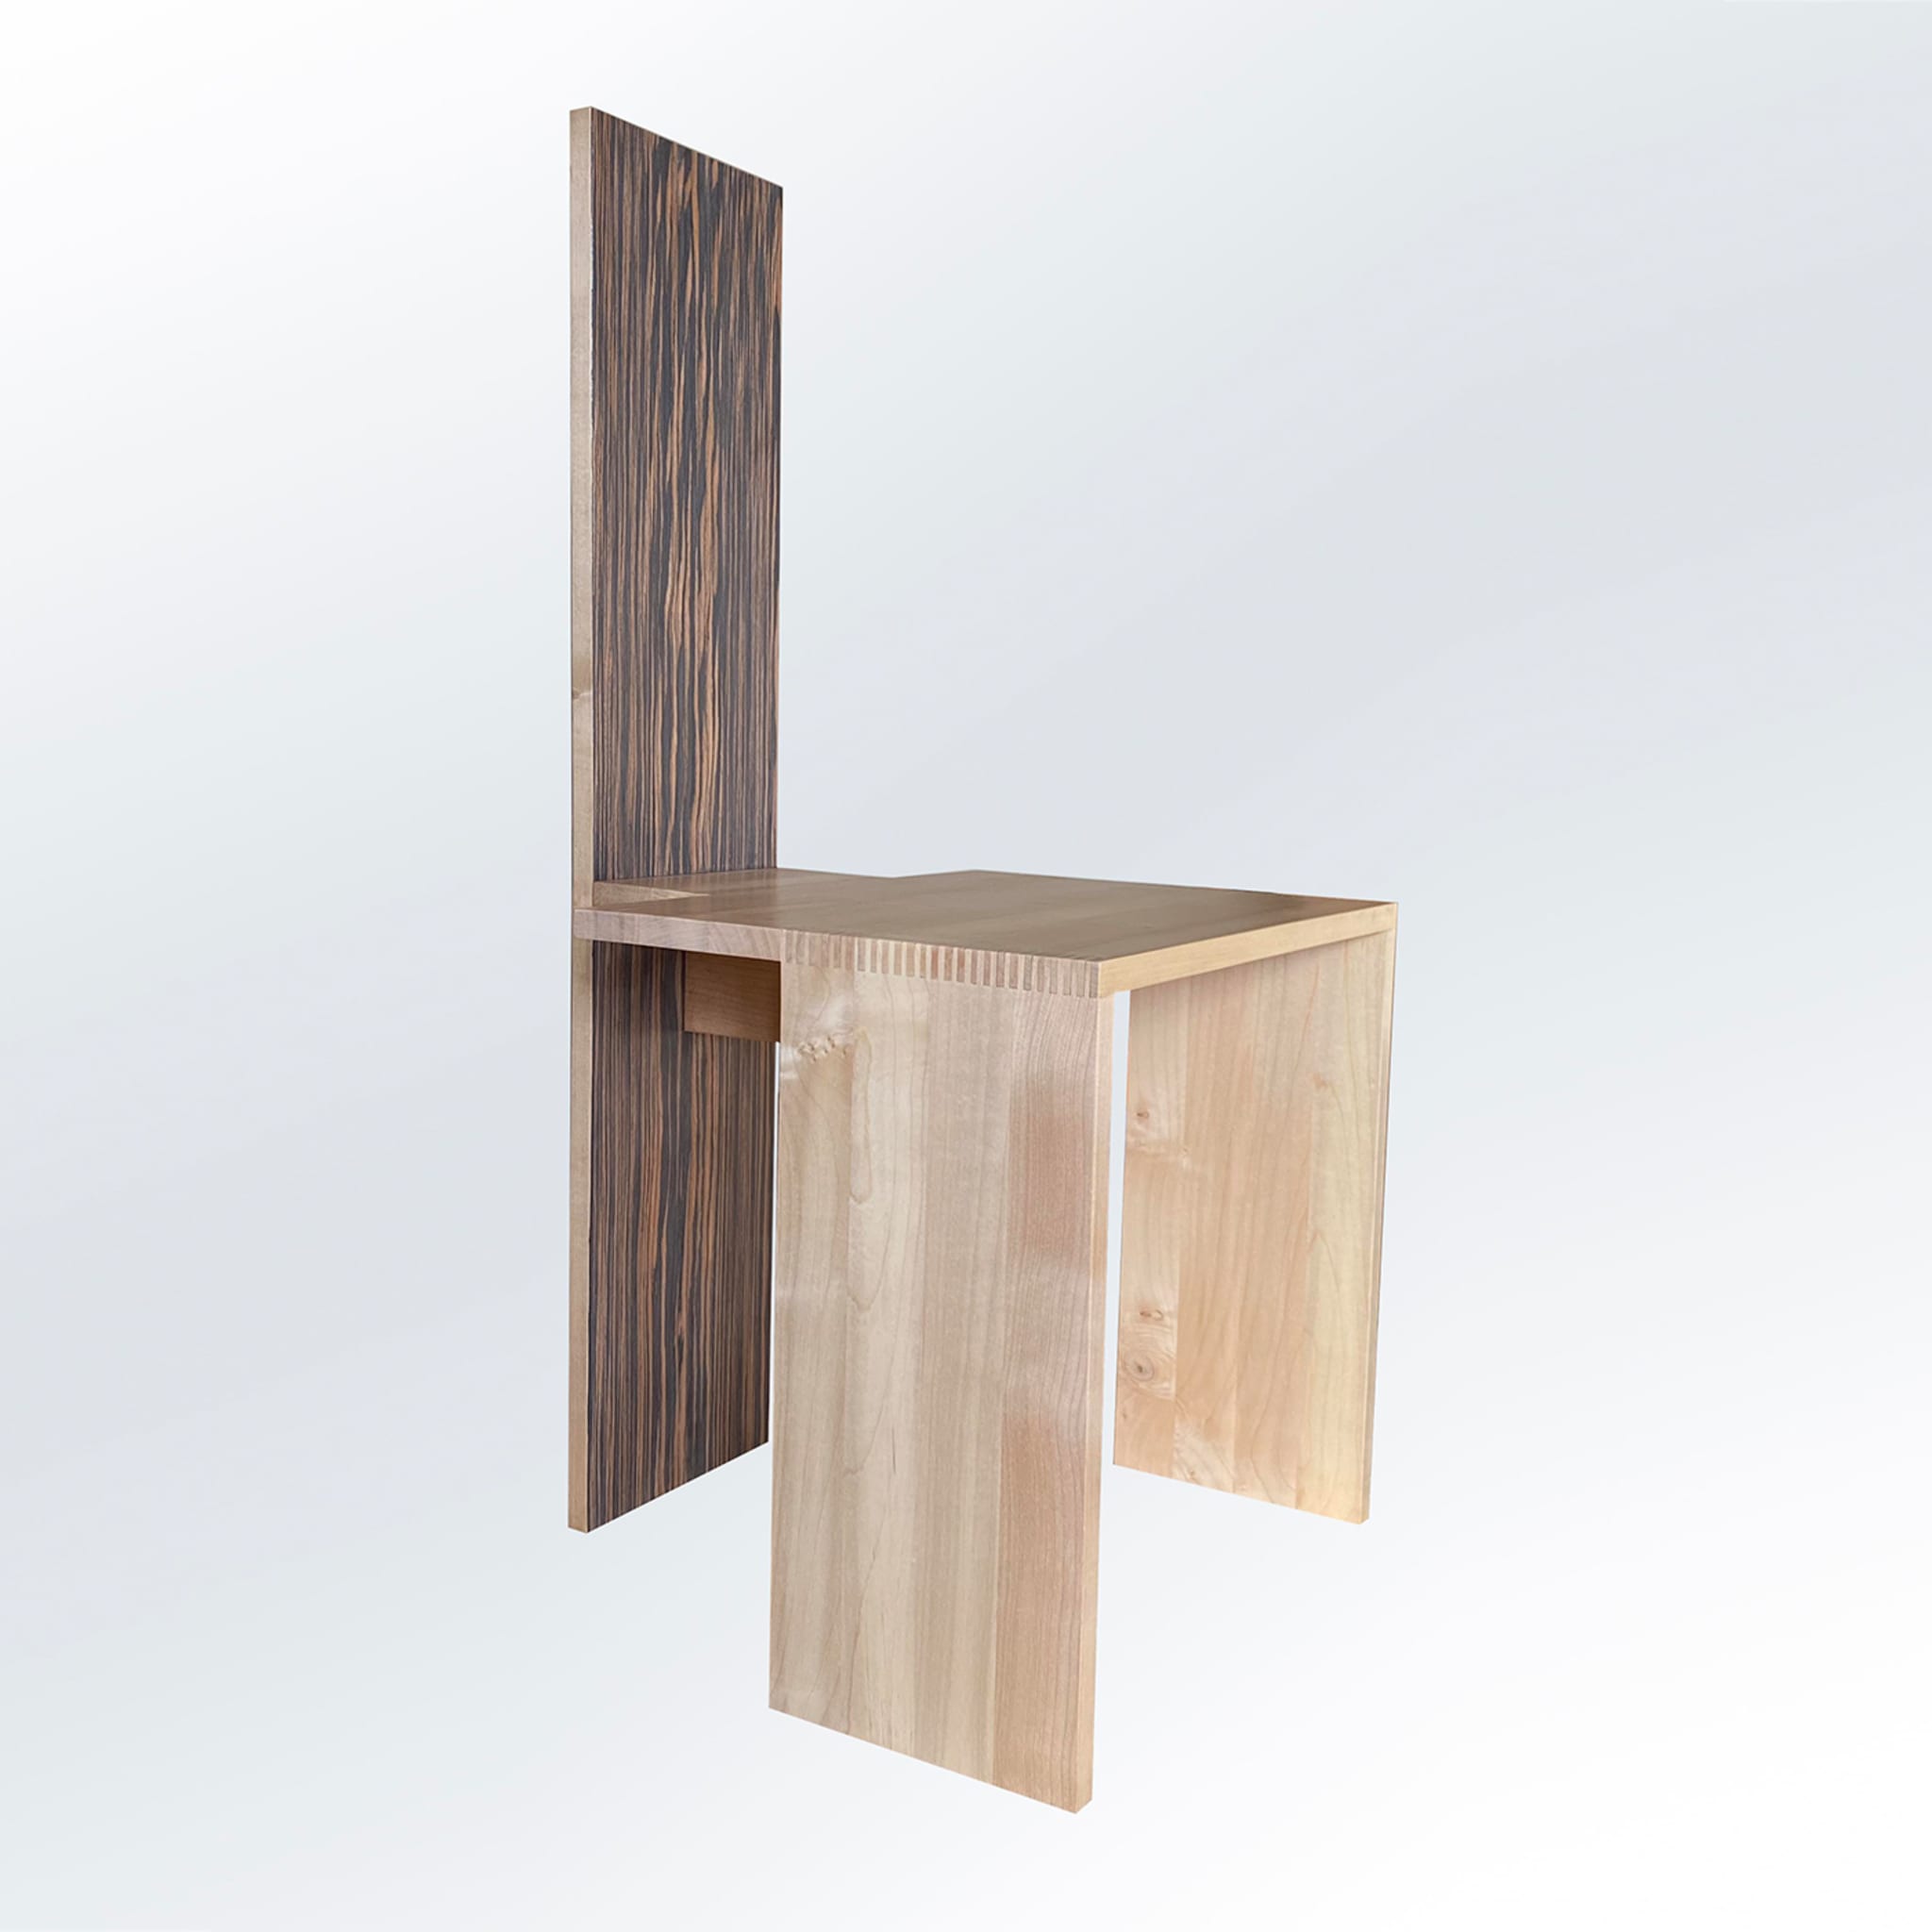 Cimabue Chair Limited Edition by Ferdinando Meccani - Alternative view 1